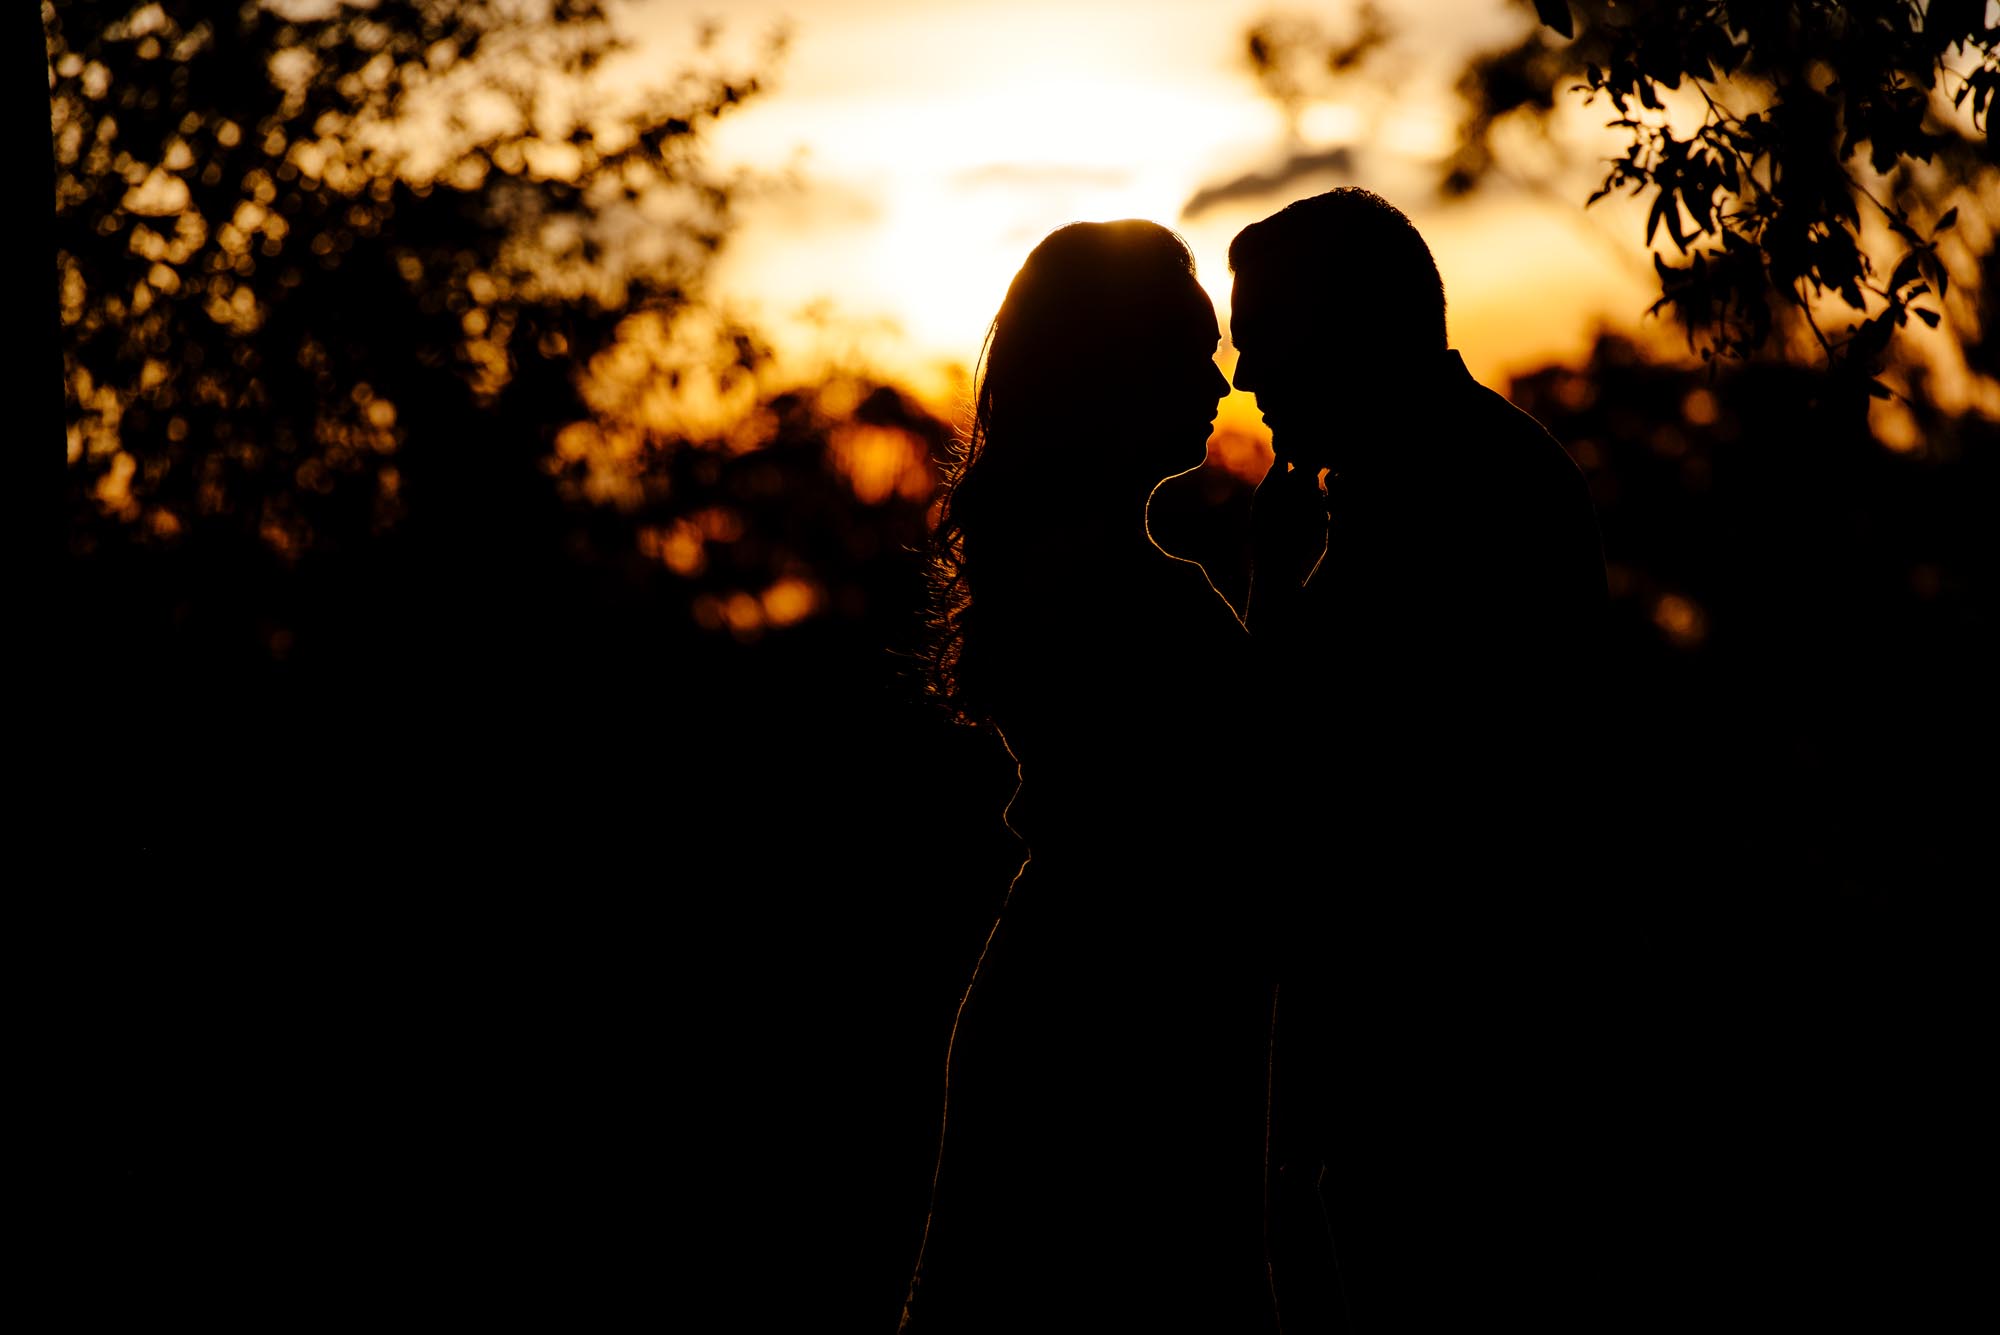 Neil and Emma sunset silhouette at Lake Parramatta